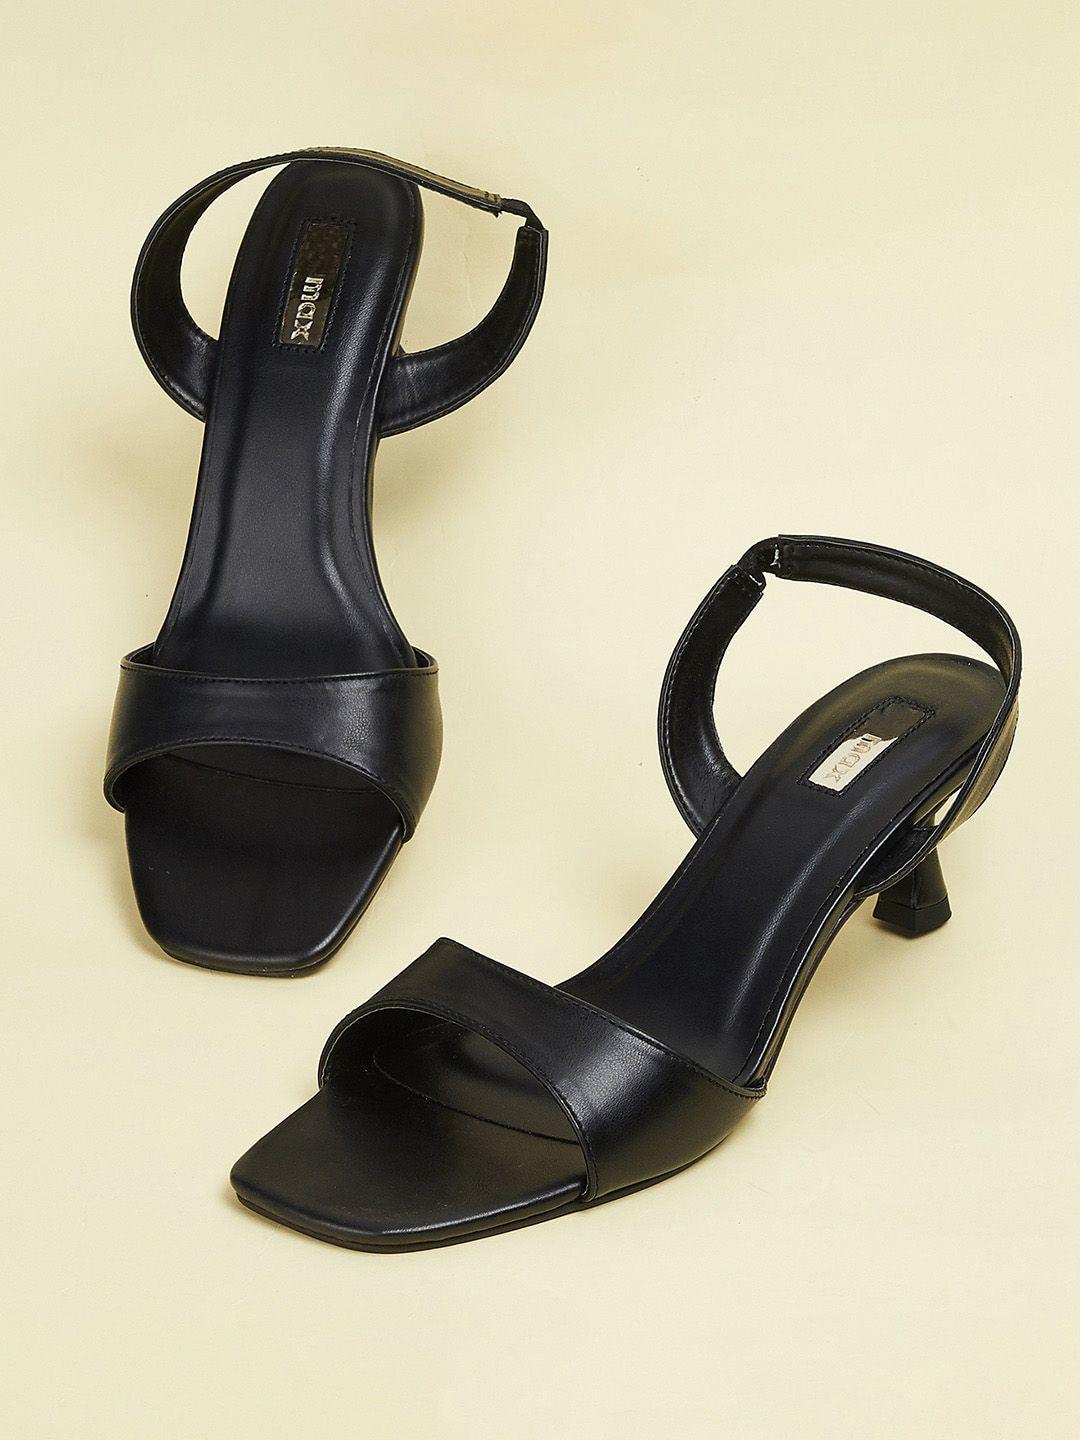 max-open-toe-slim-heels-with-backstrap